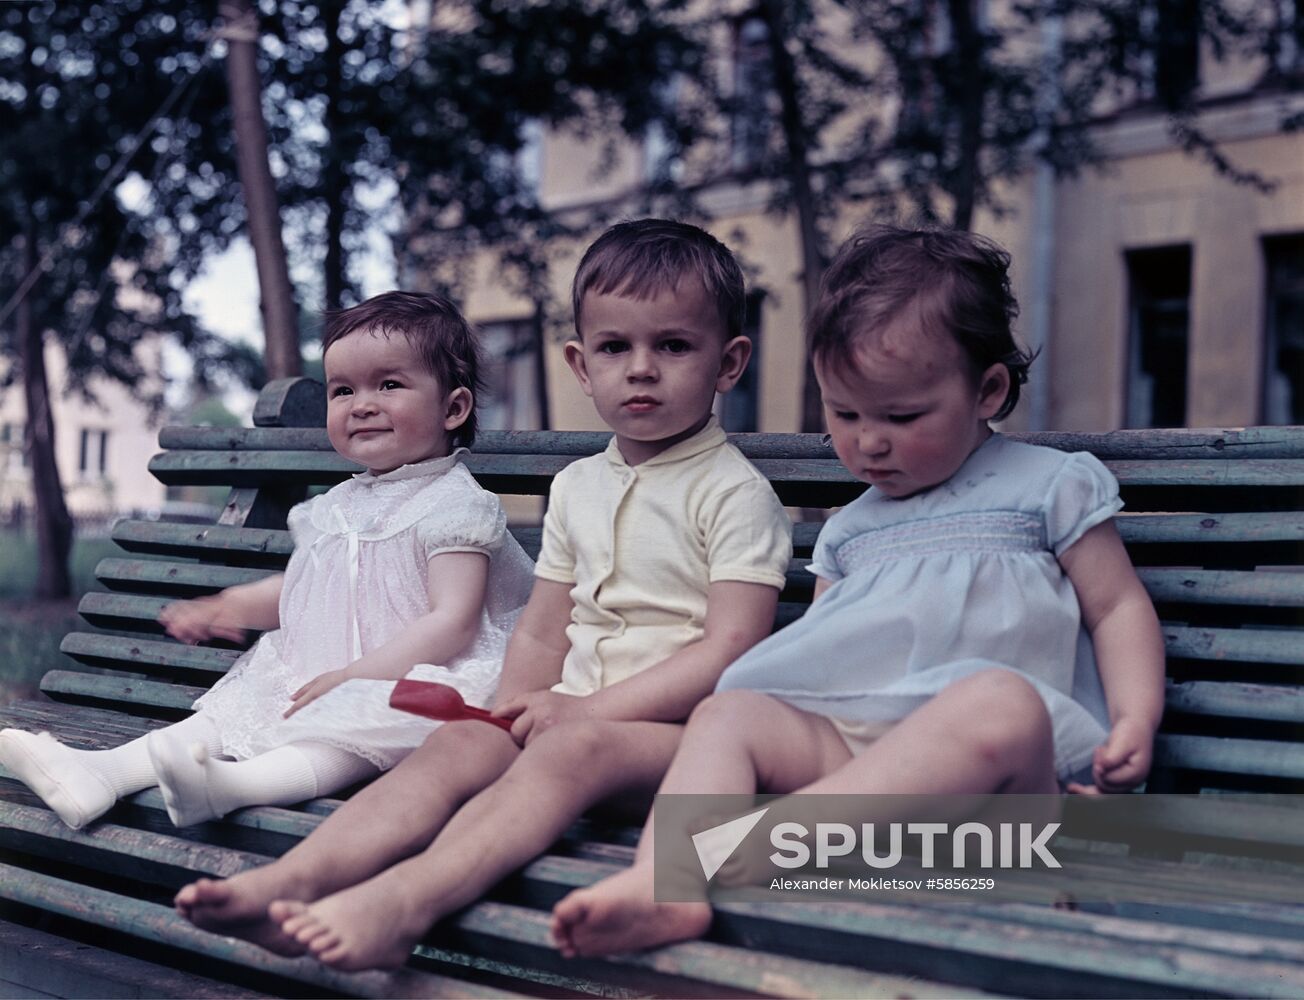 Children of Soviet cosmonauts